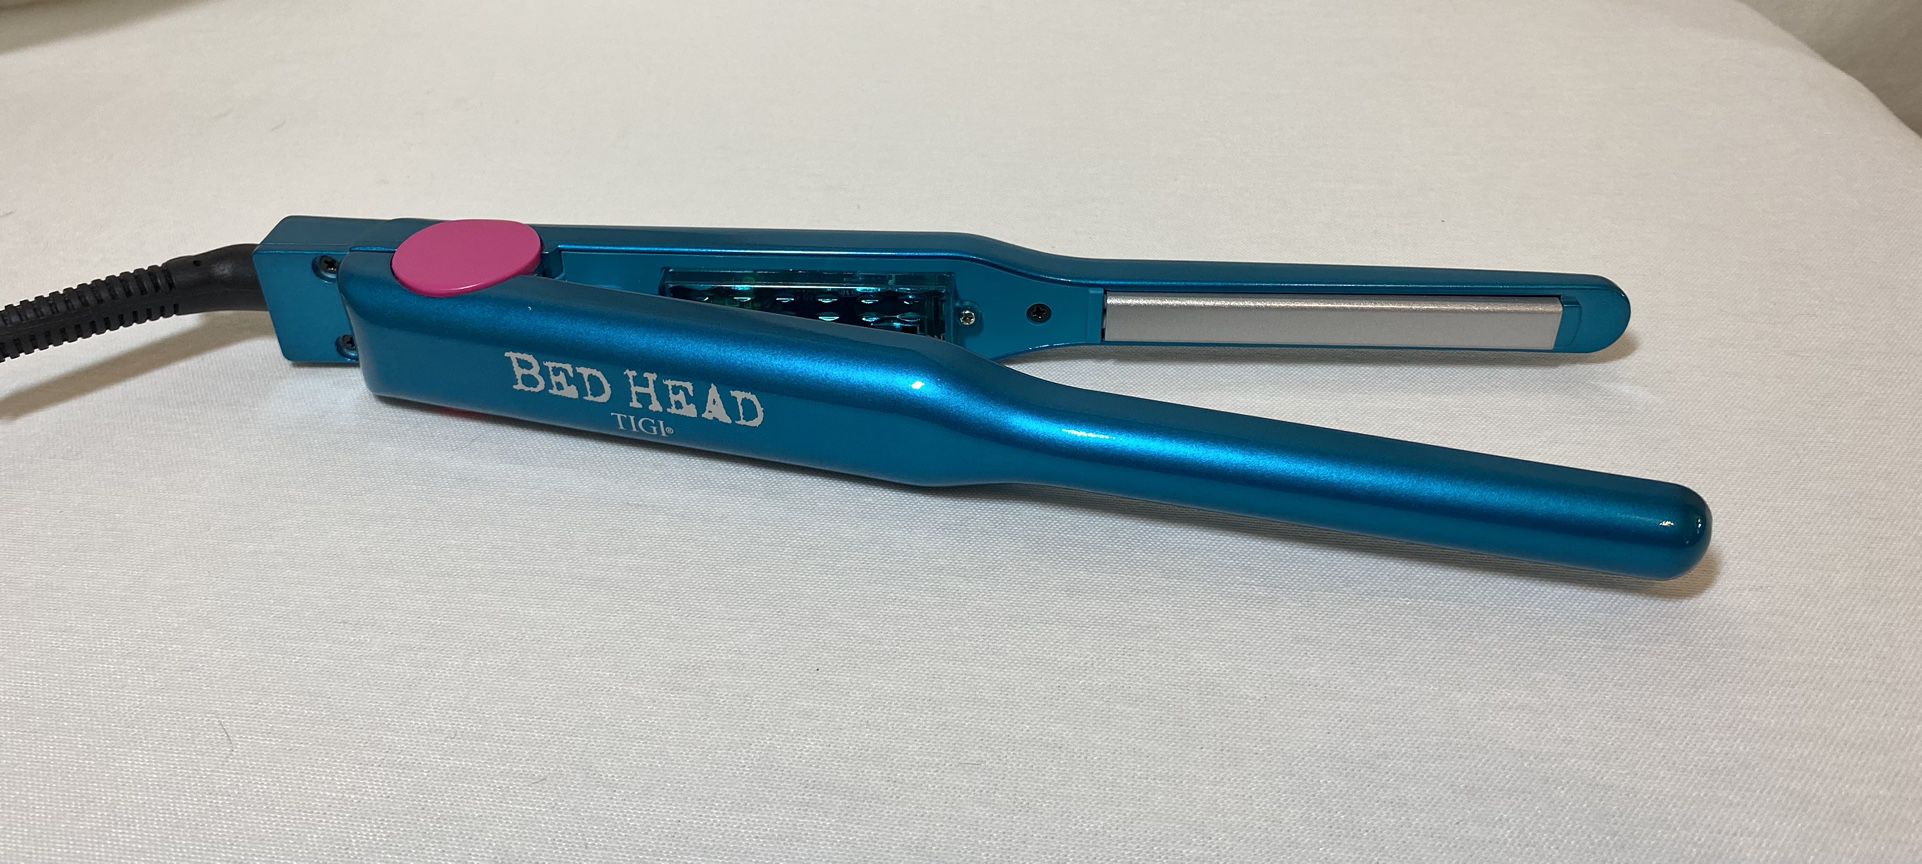 Bed Head  0.5” Straightener